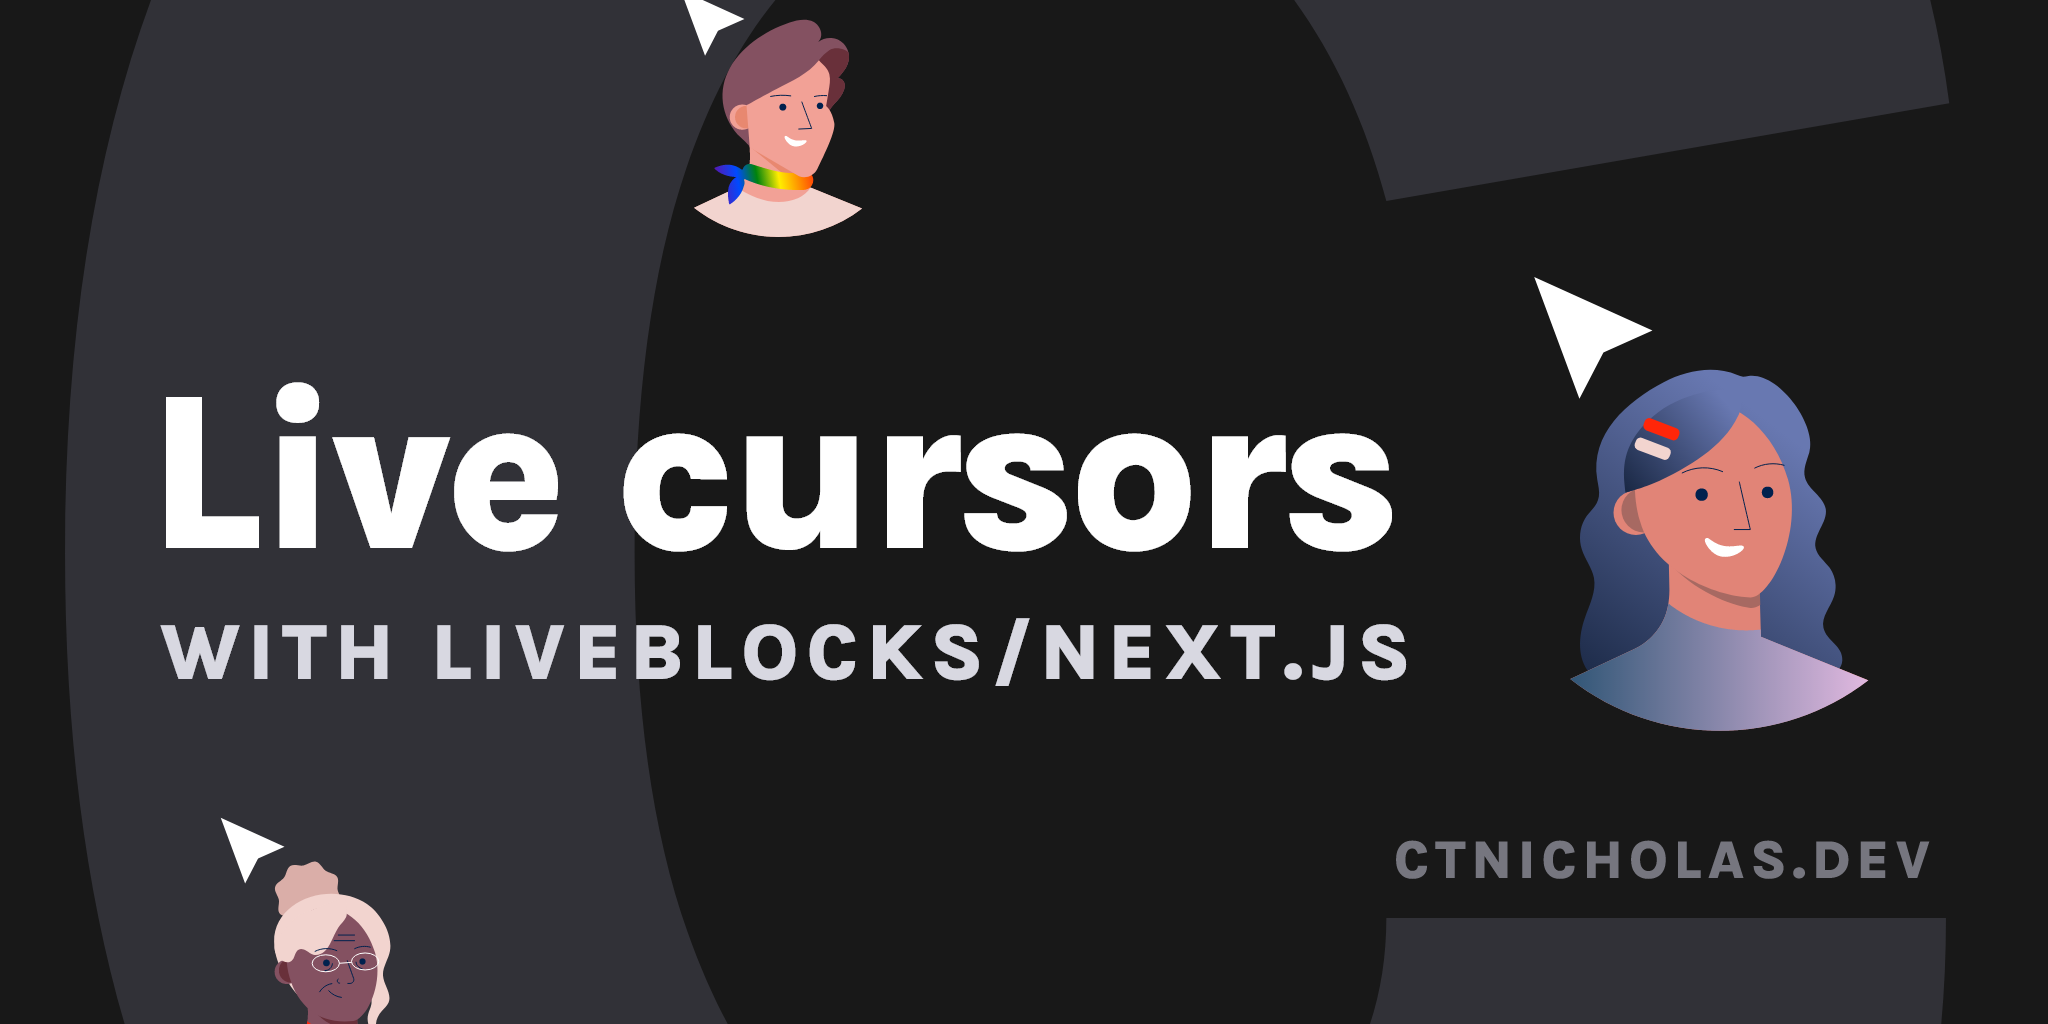 Adding live cursors to Next.js